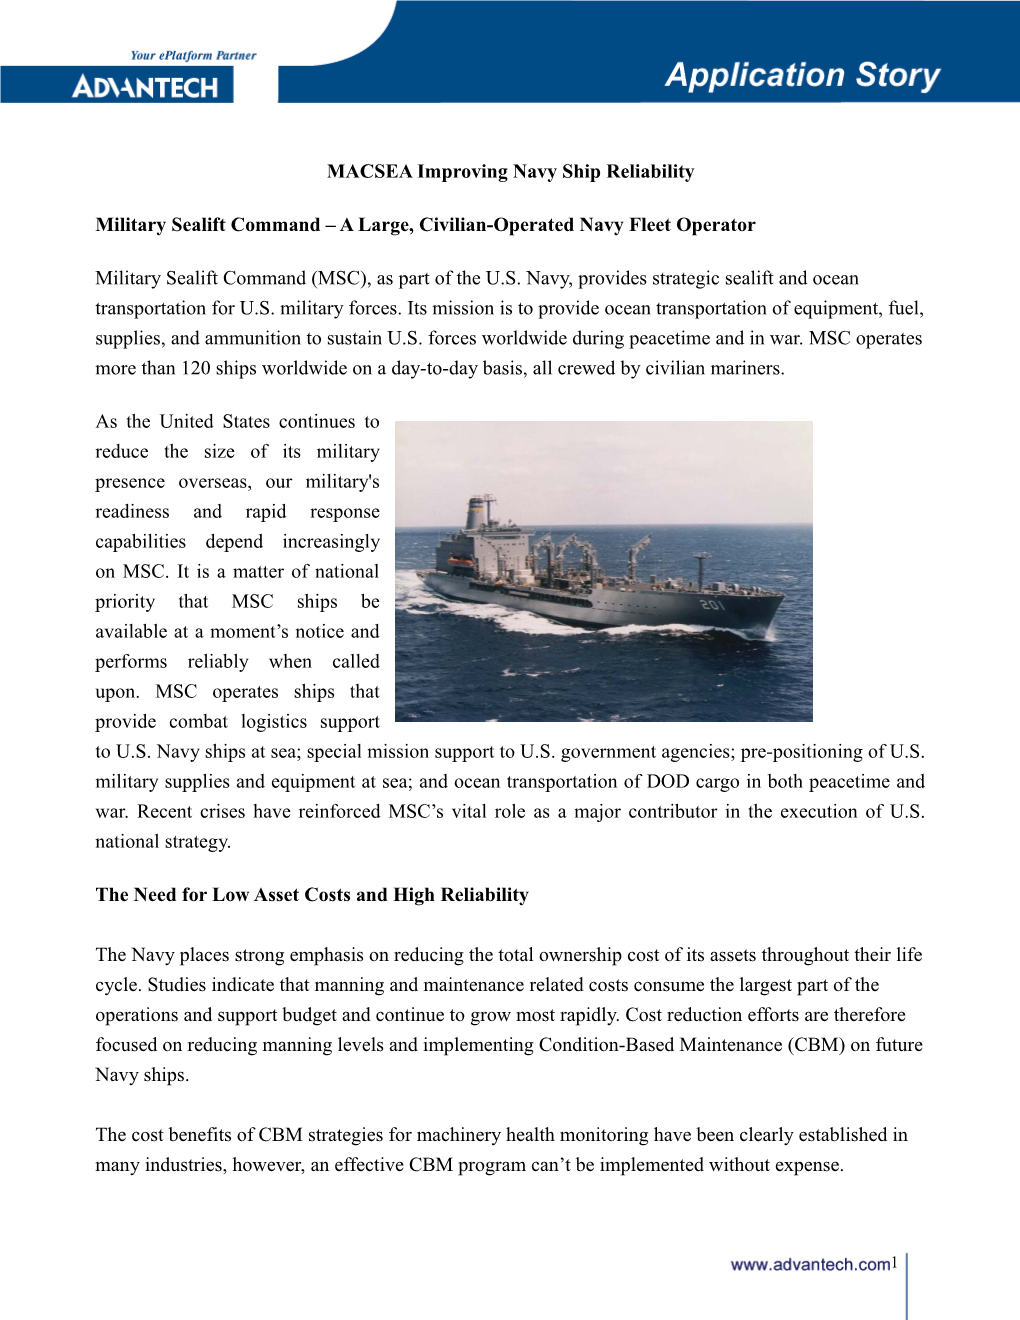 Macseaimproving Navy Ship Reliability